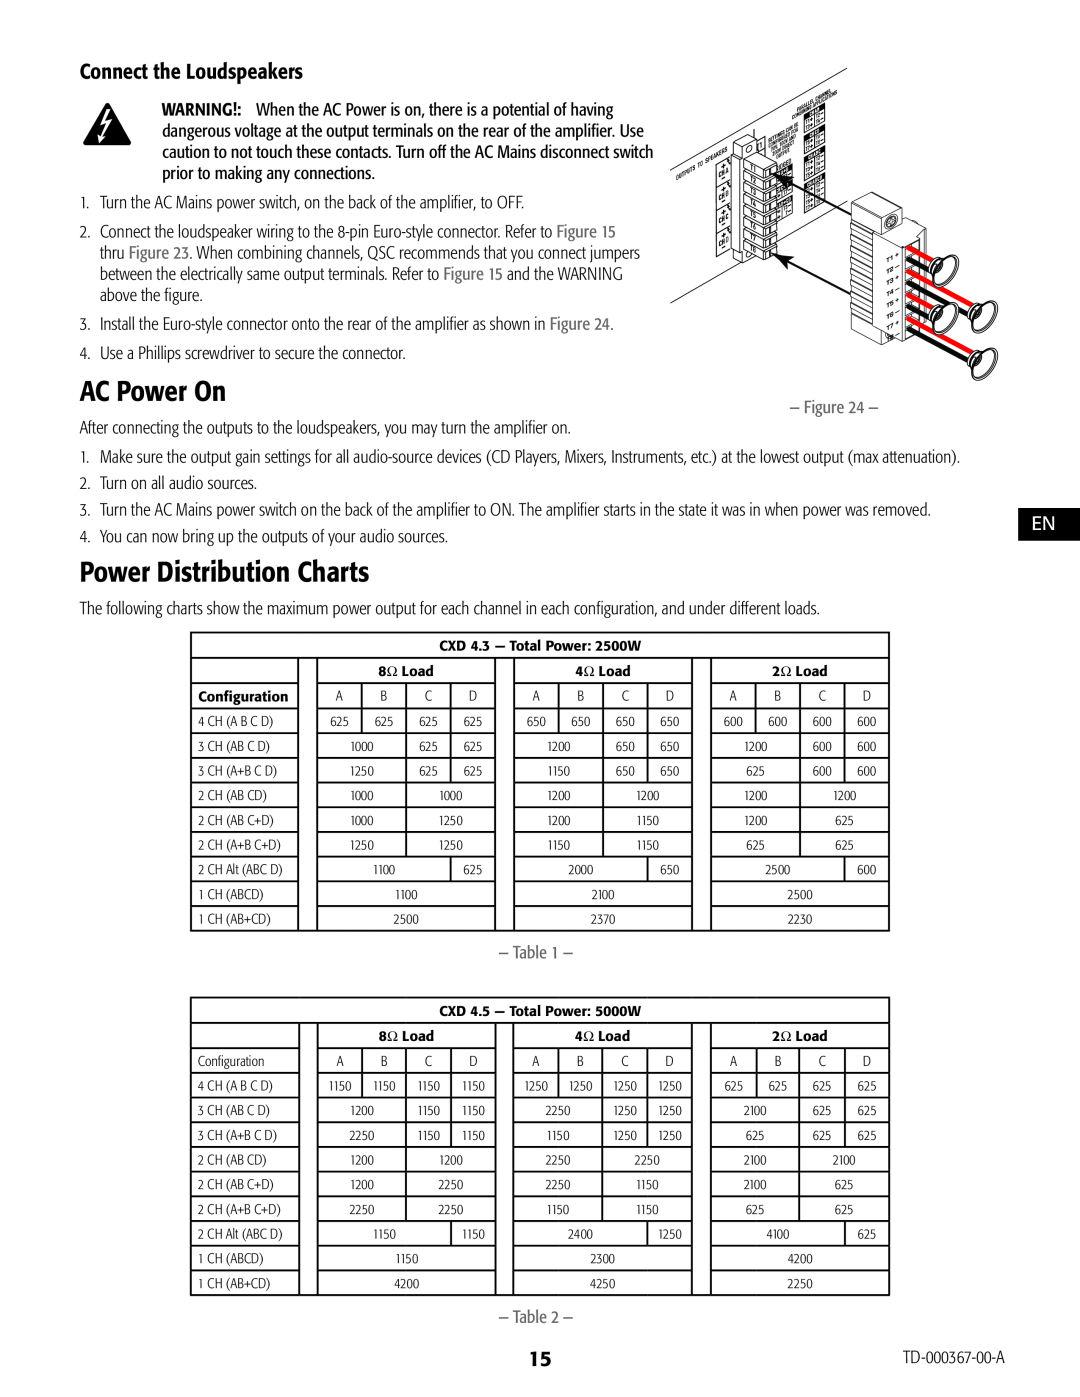 QSC Audio CXD4.2, CXD4.5, CXD4.3 manual AC Power On, Power Distribution Charts 